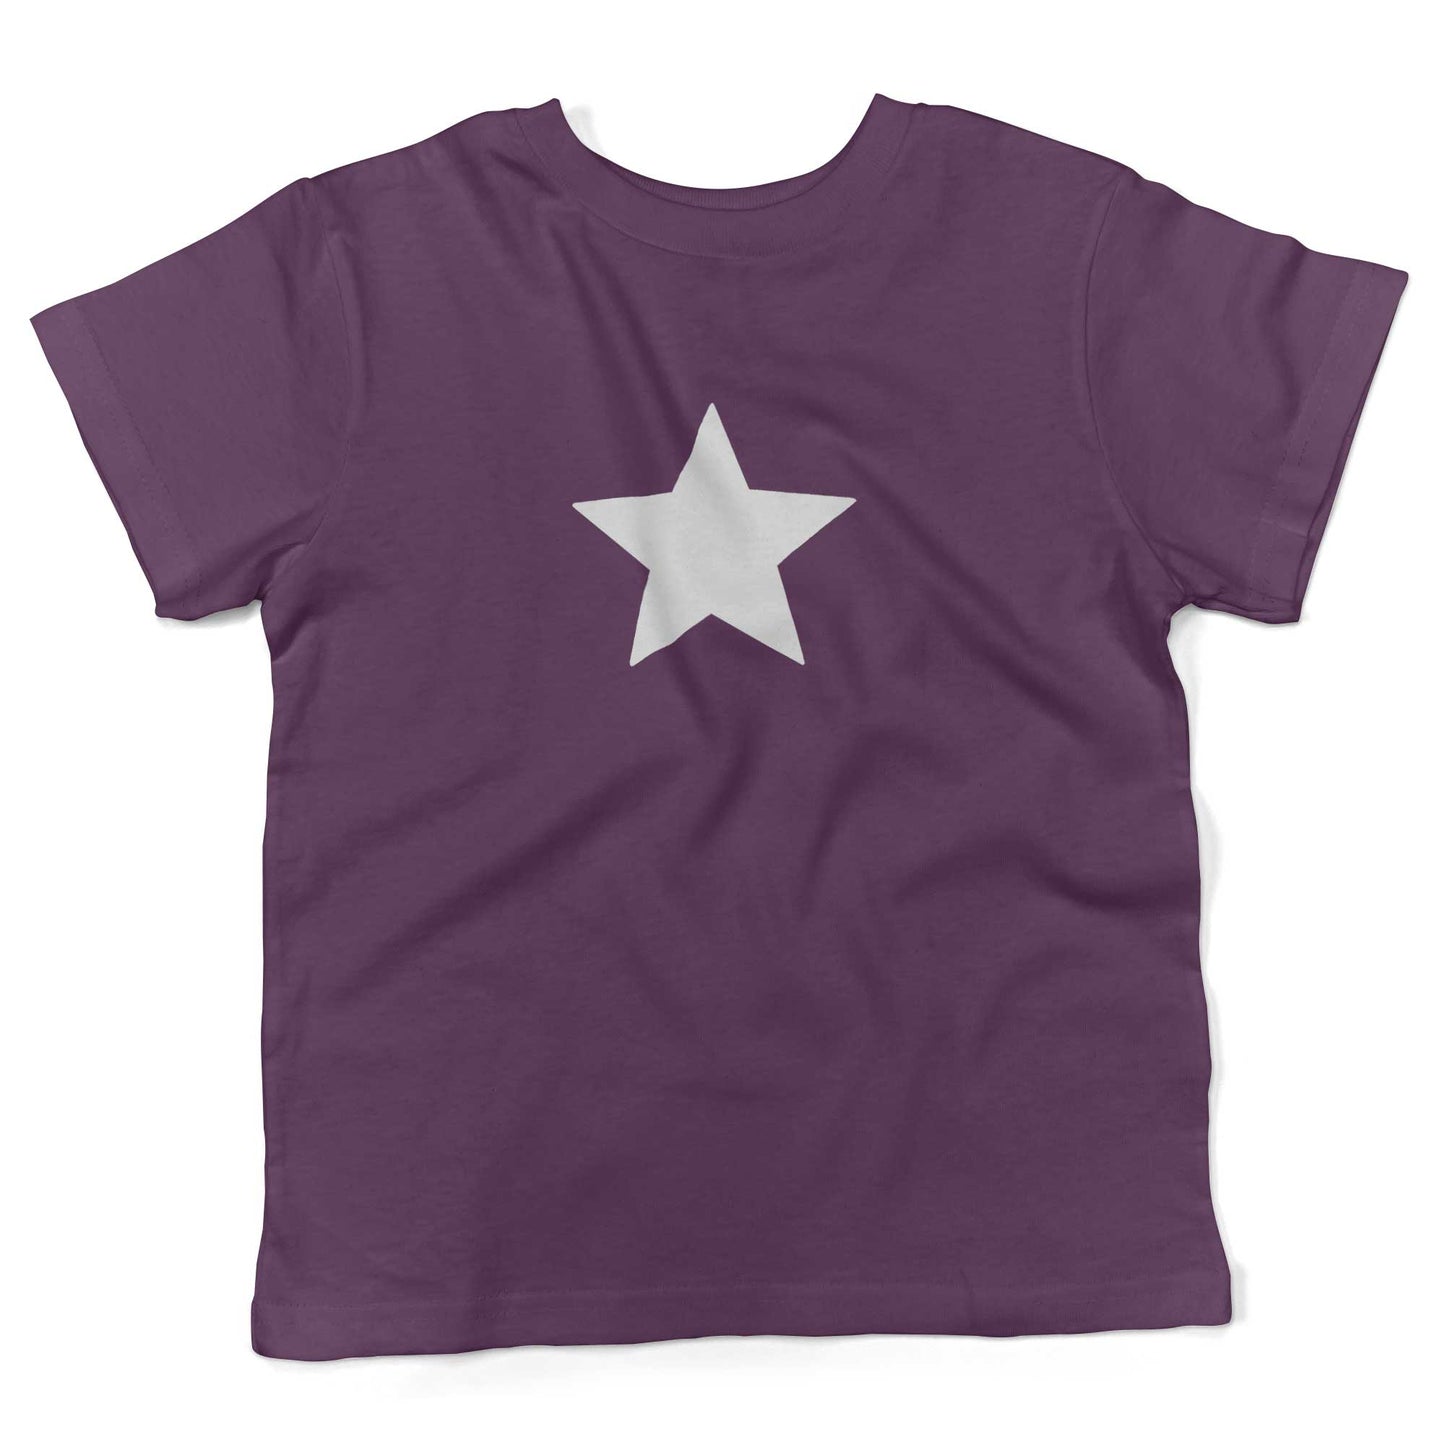 Five-Point Star Toddler Shirt-Organic Purple-White Star